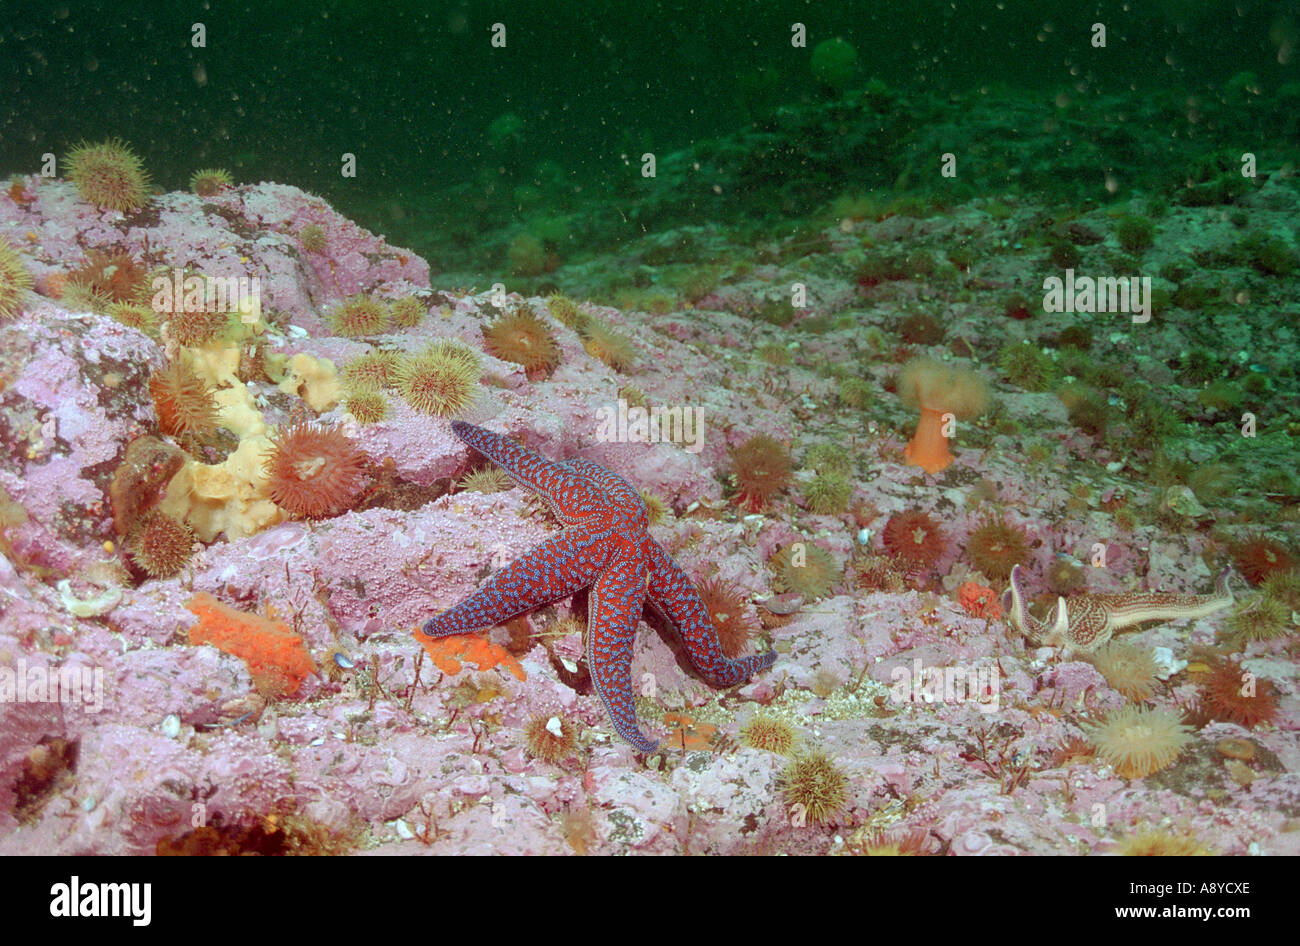 Underwater landscape bottom Sea star Evasterias retifera, anemones Cnidopus, Urticina yellow Sponges red coralline algae Pacific Stock Photo